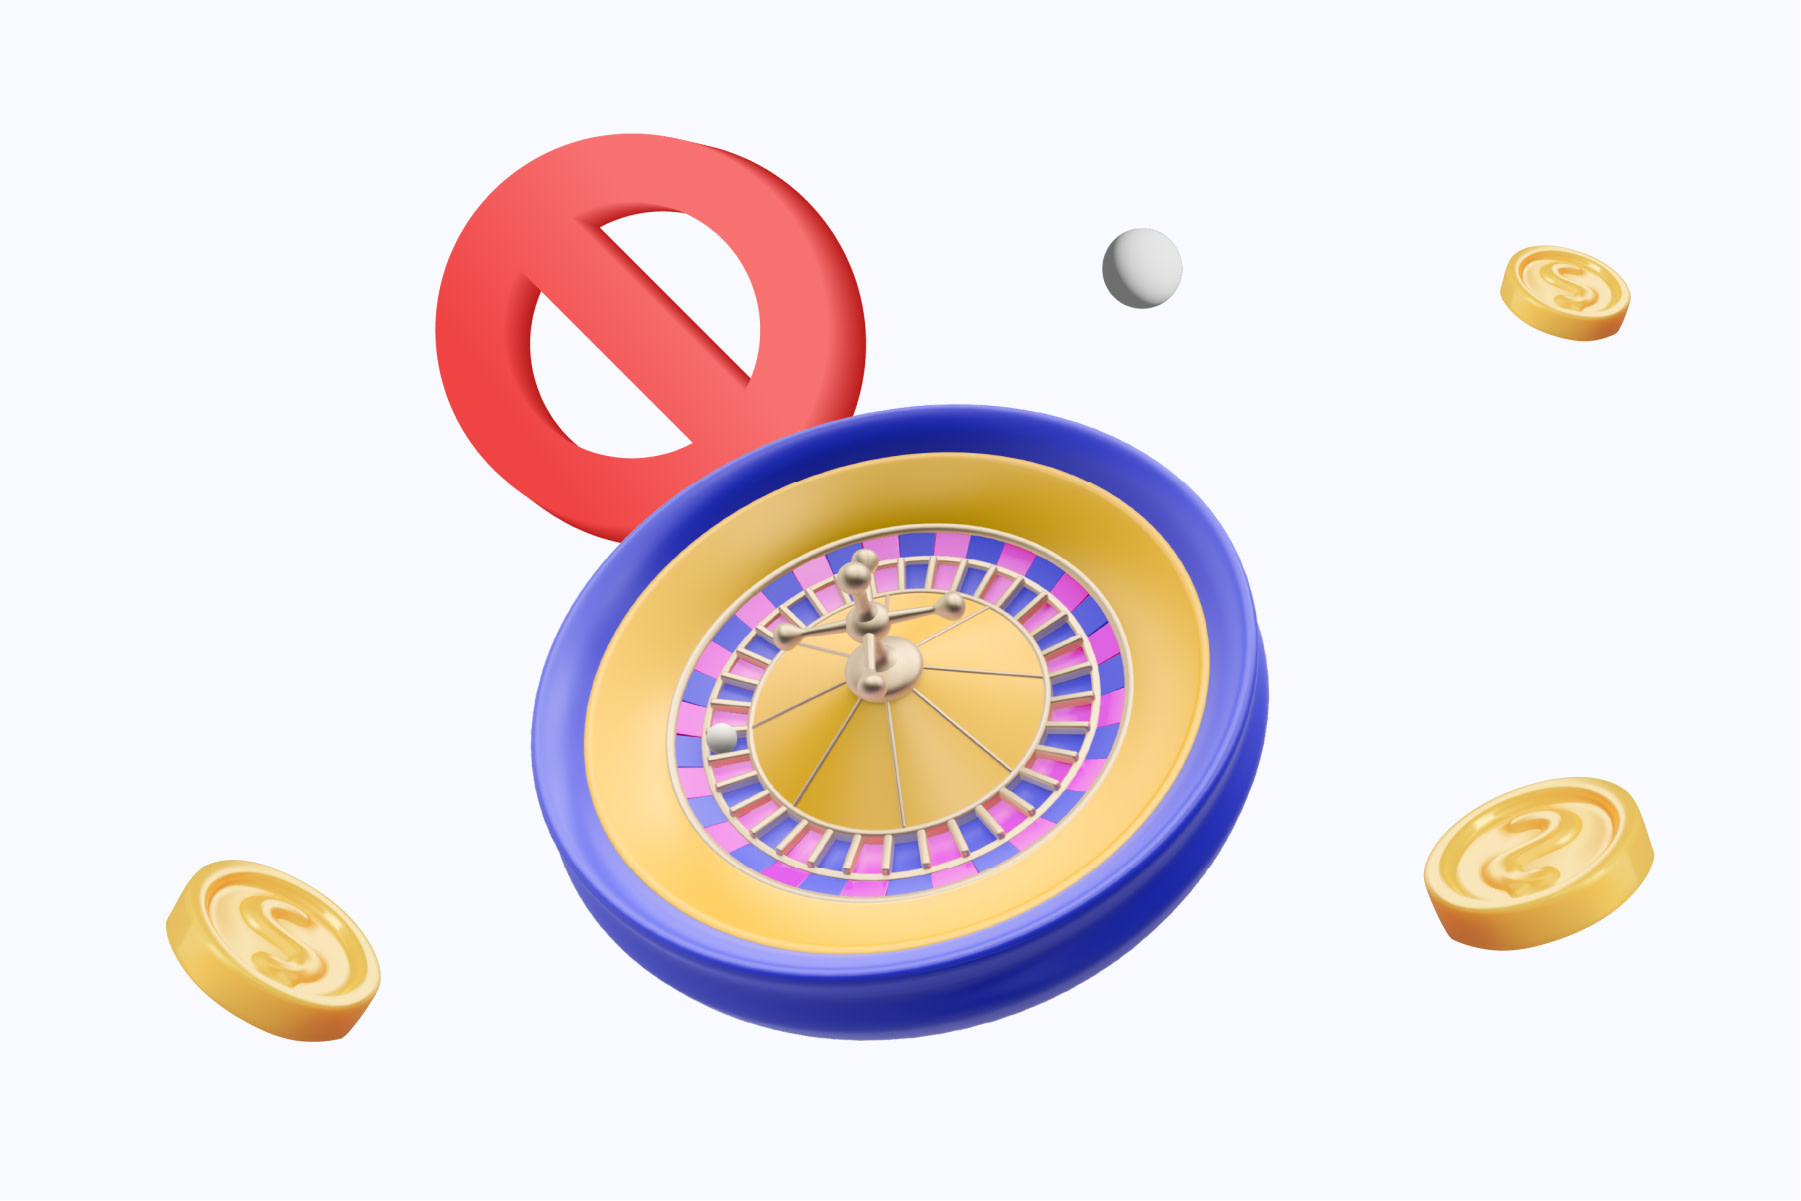 Image of a roulette wheel for no zero roulette